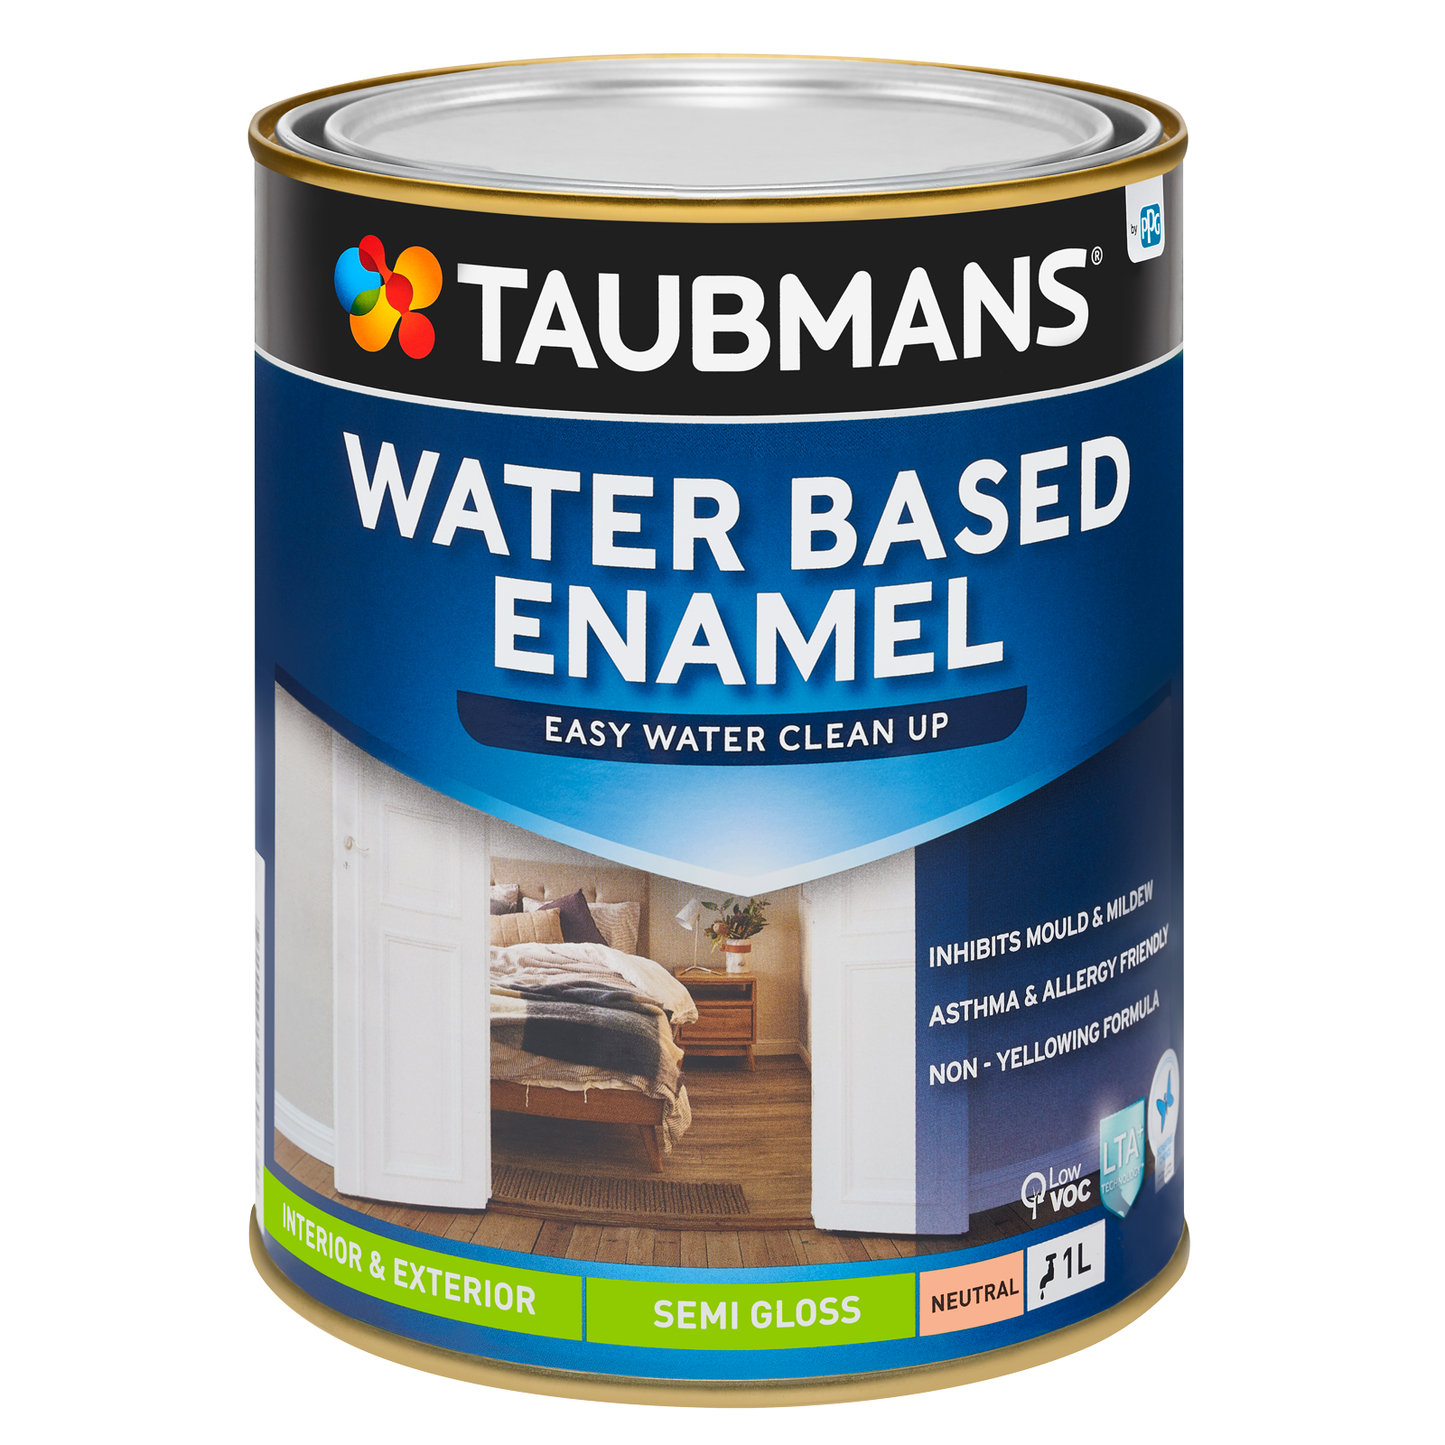 Taubmans Water Based Enamel Paint 1L- Neutral Semi Gloss